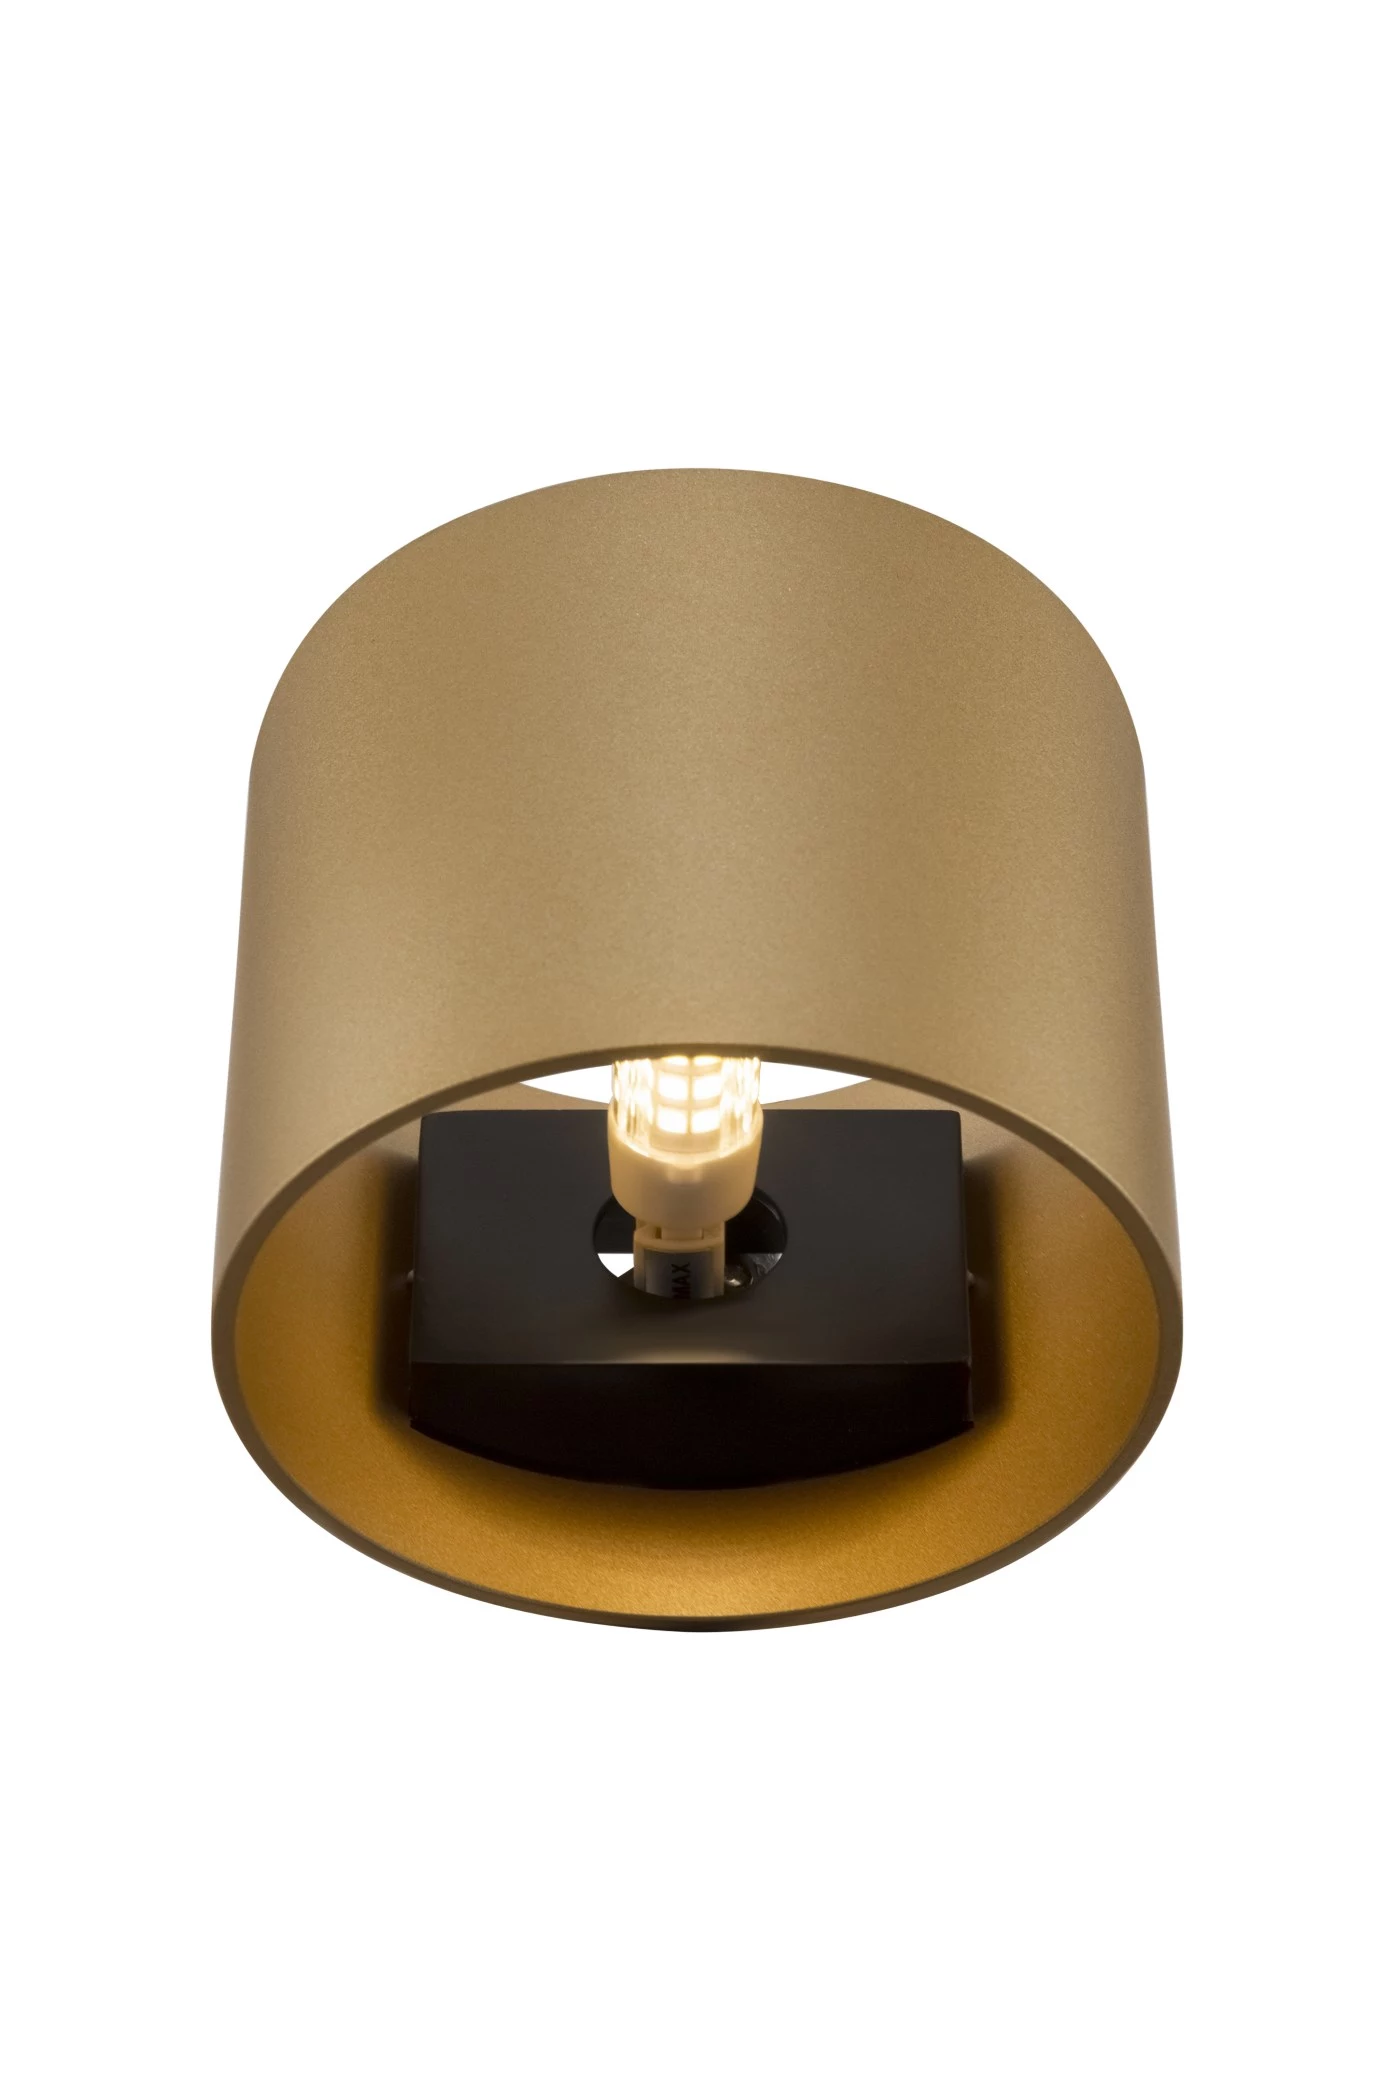   
                        
                        Декоративная подсветка MAYTONI (Германия) 34554    
                         в стиле Лофт.  
                        Тип источника света: светодиодная лампа, сменная.                                                 Цвета плафонов и подвесок: Золото.                         Материал: Алюминий.                          фото 4